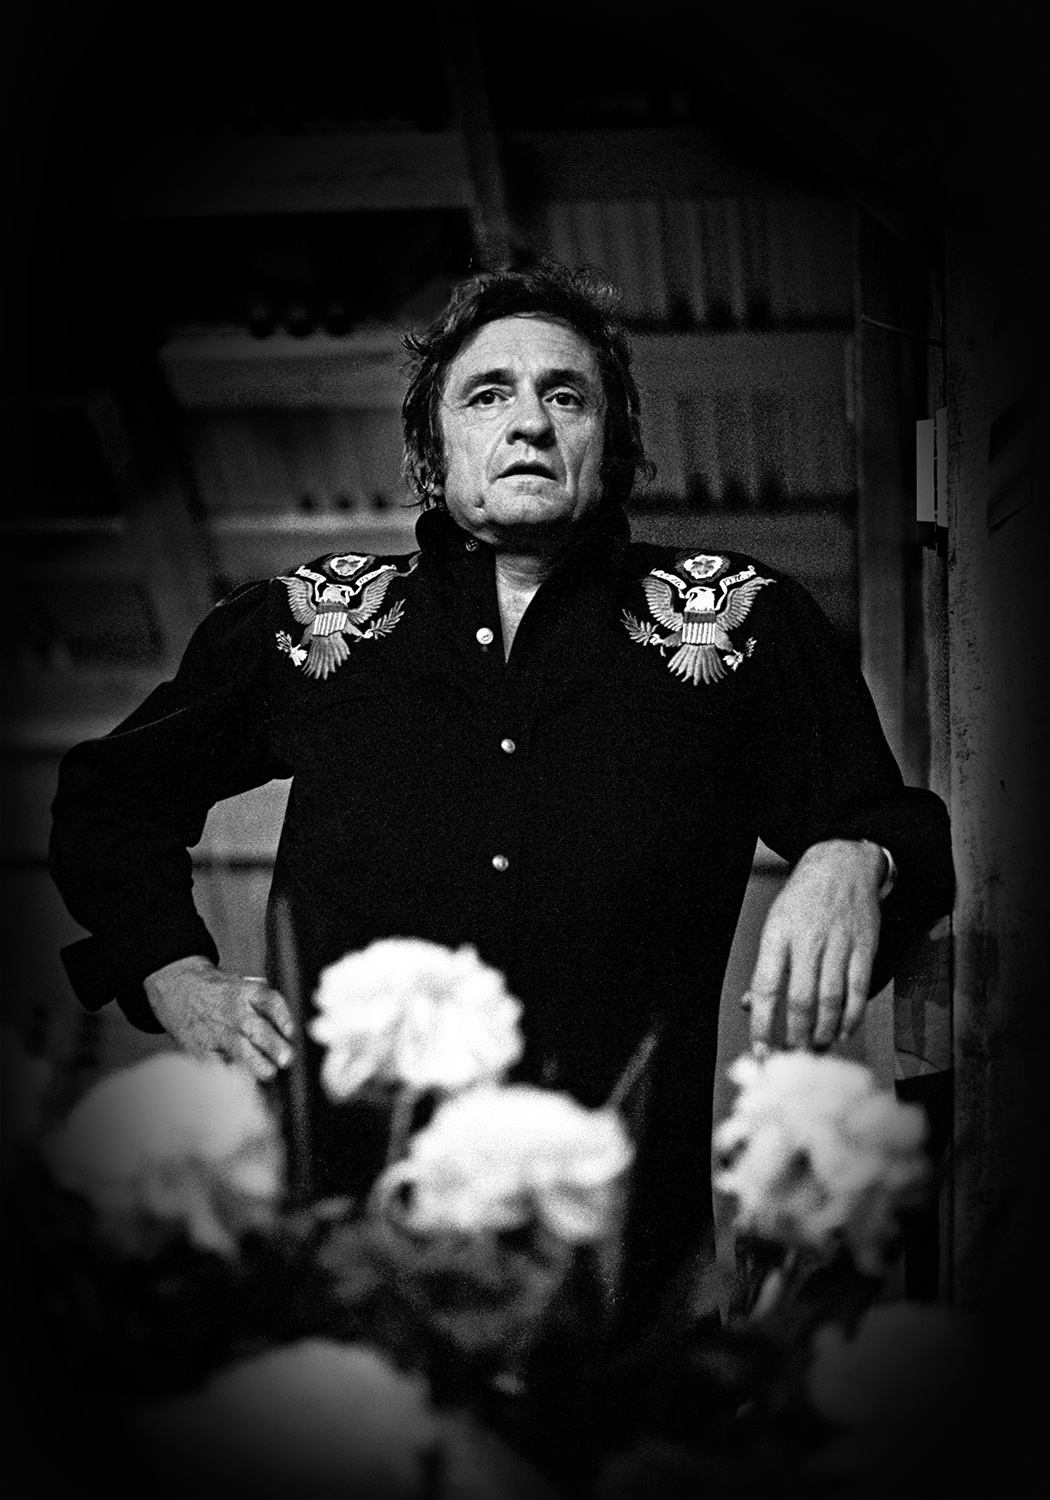  Johnny Cash, 1977 